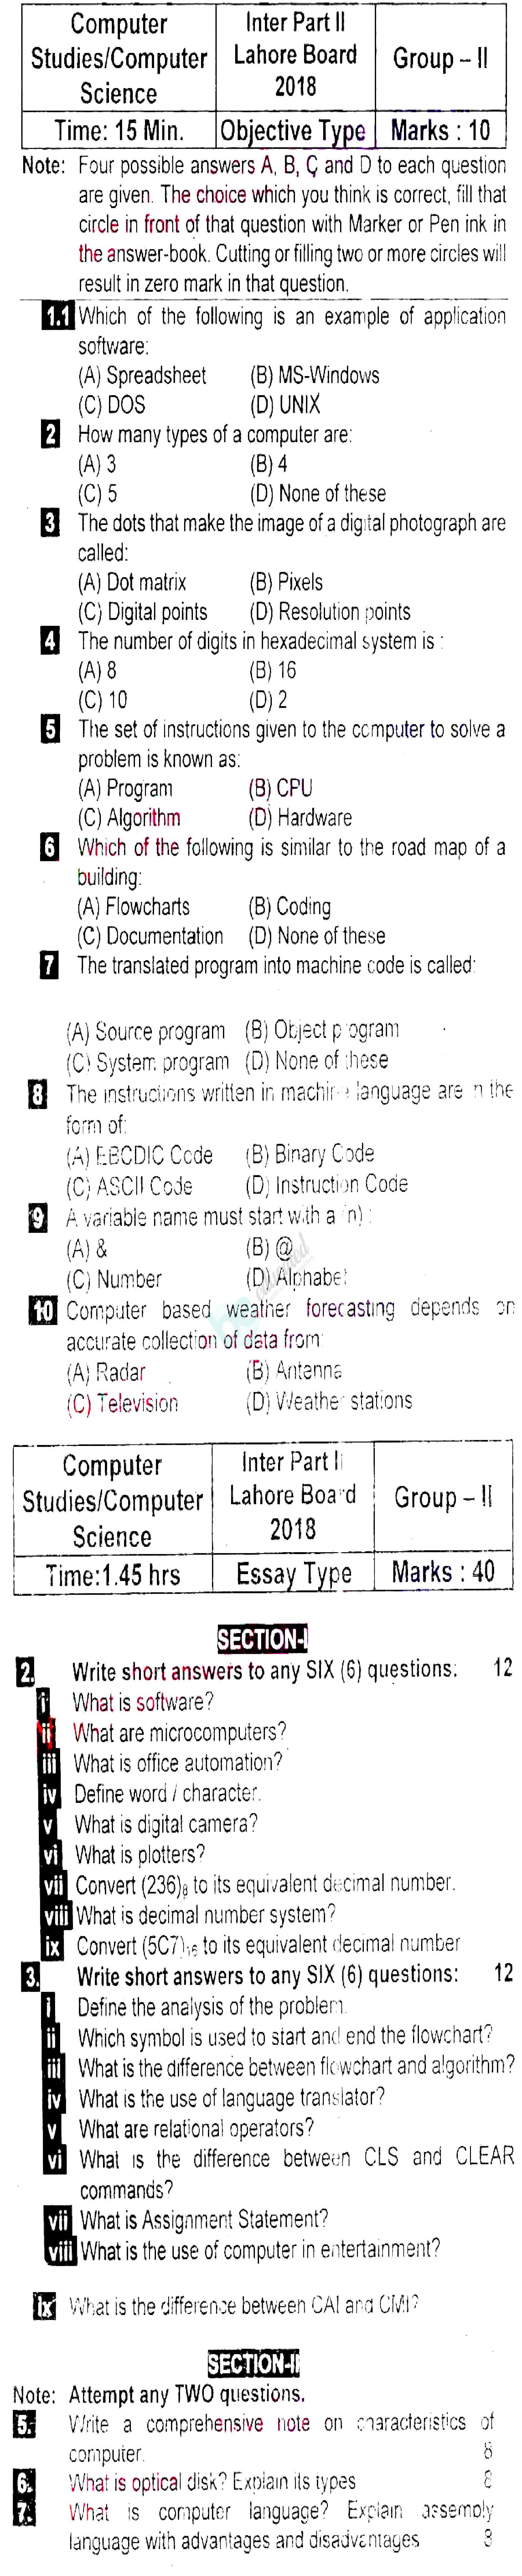 Computer Science ICOM Part 2 Past Paper Group 2 BISE Lahore 2018